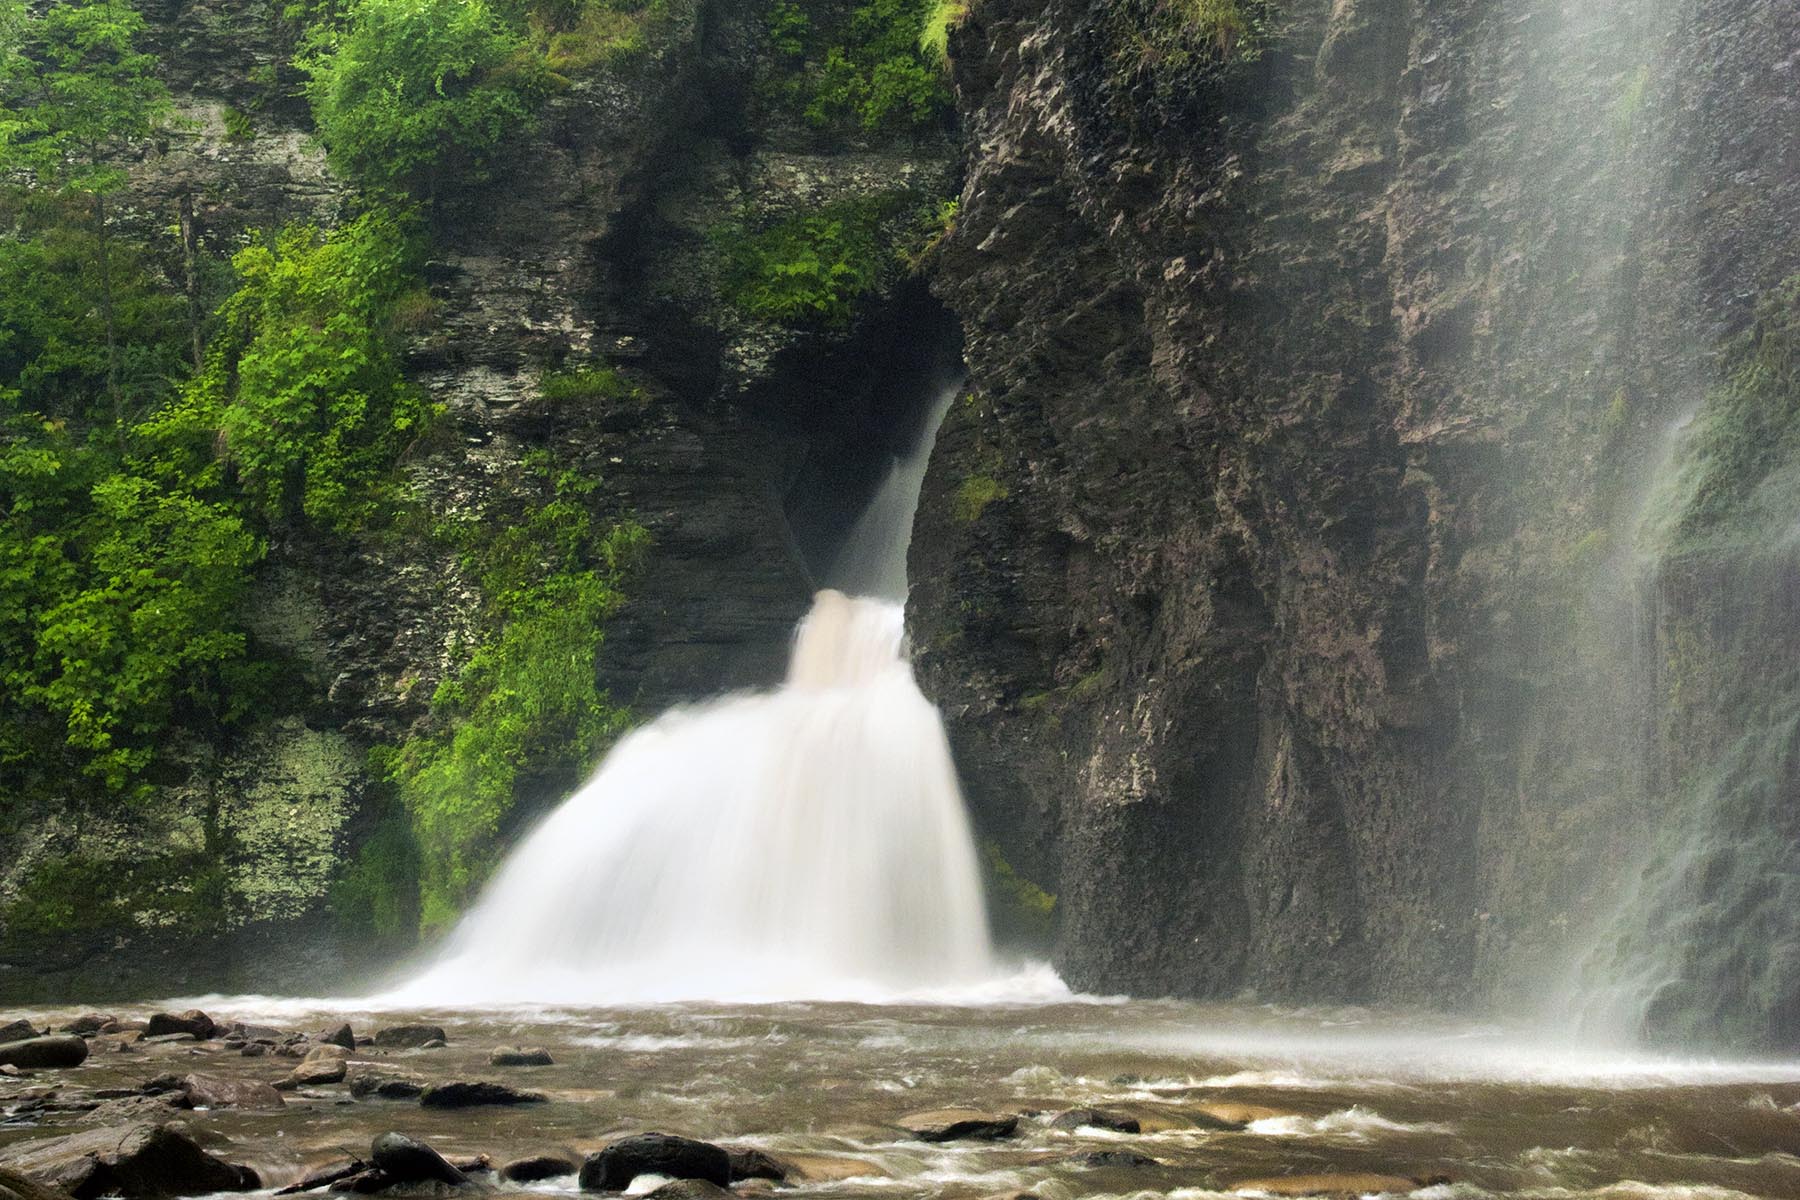 Finding Waterfalls